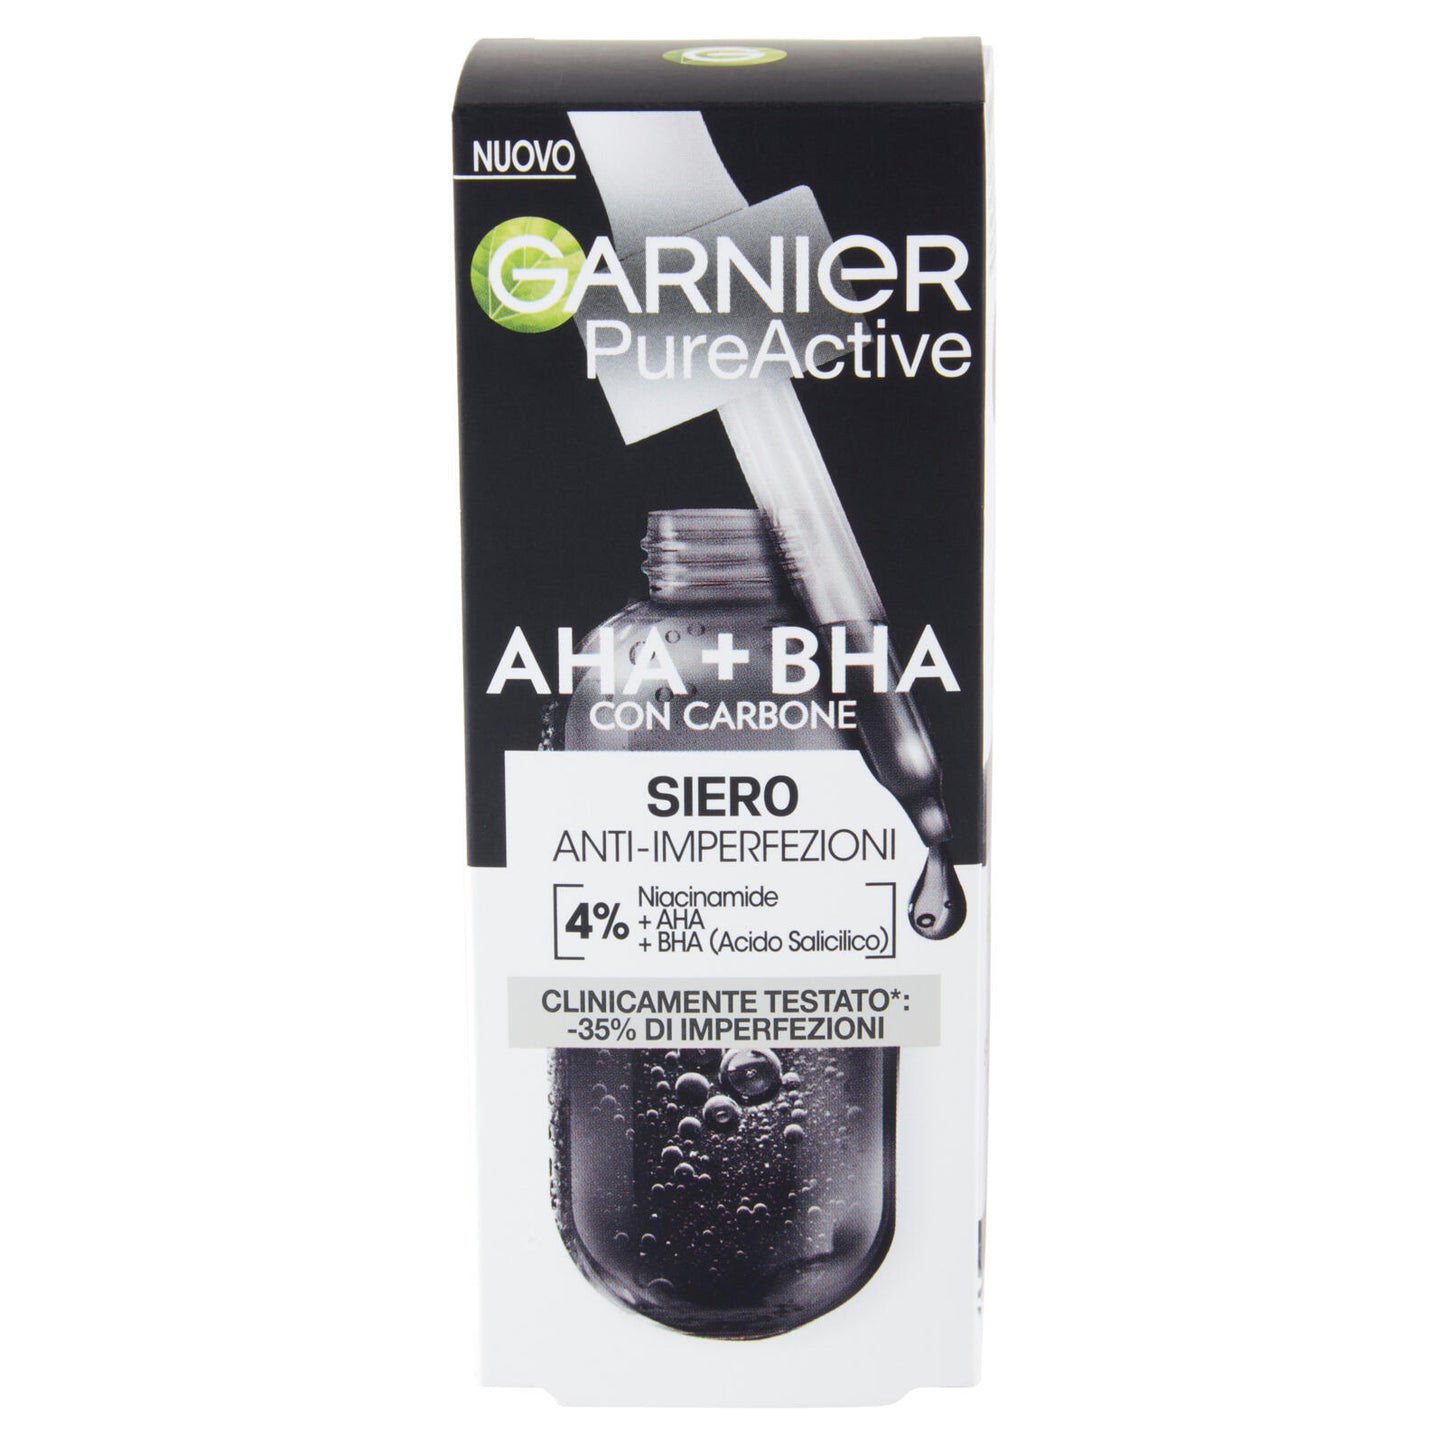 Garnier PureActive, Siero AHA+BHA Anti-Imperfezioni, 30 ml